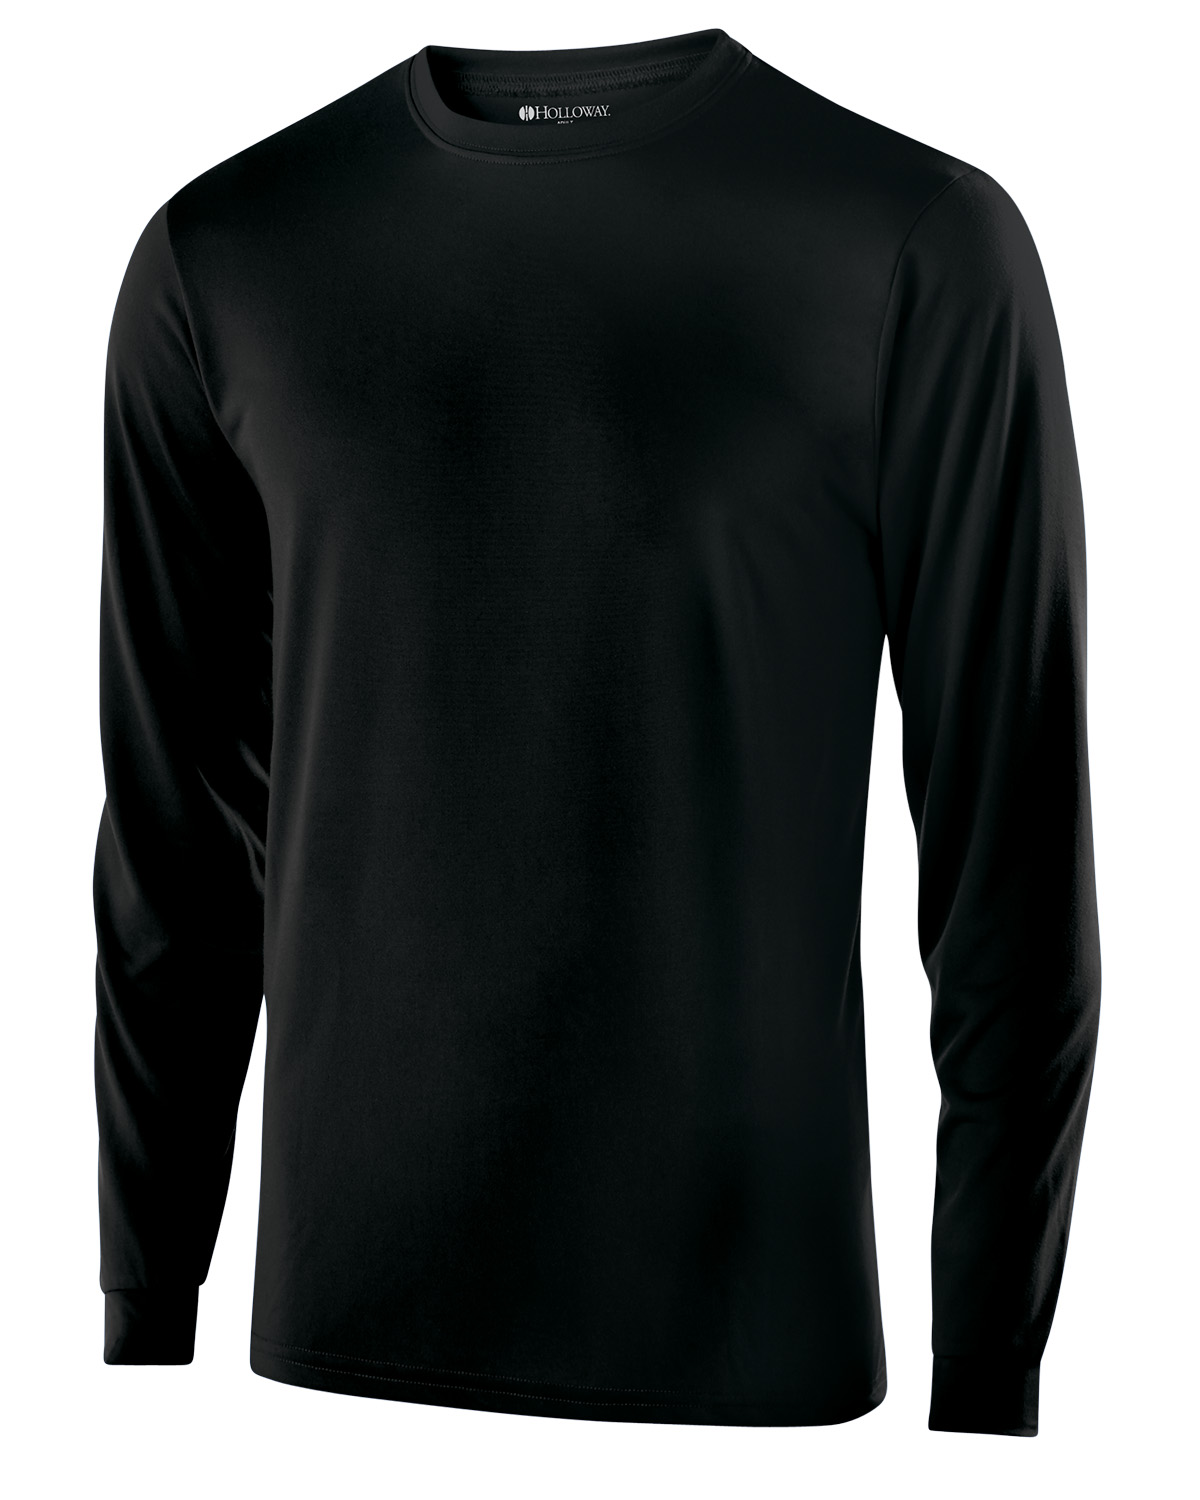 Holloway 222525 - Adult Polyester Long Sleeve Gauge Shirt